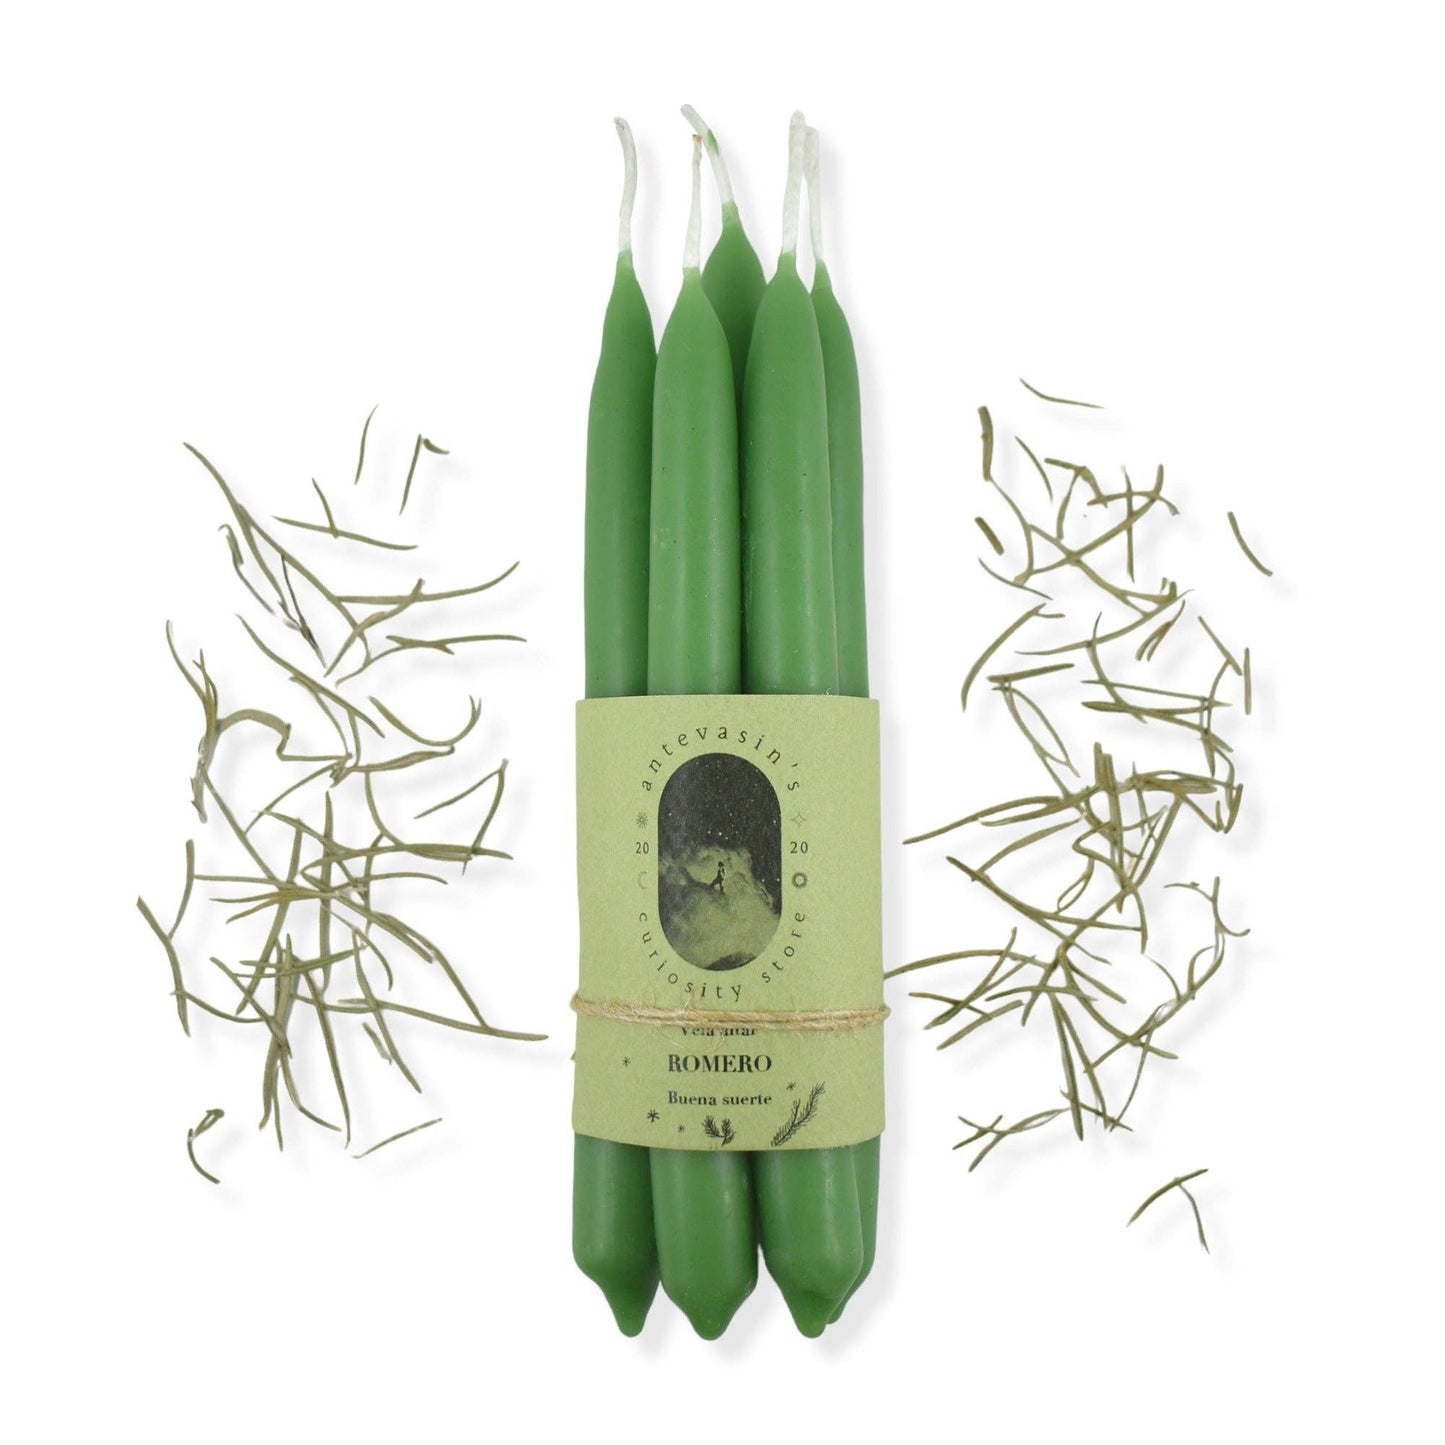 Rosemary Ritual Candle: Health + Good Luck